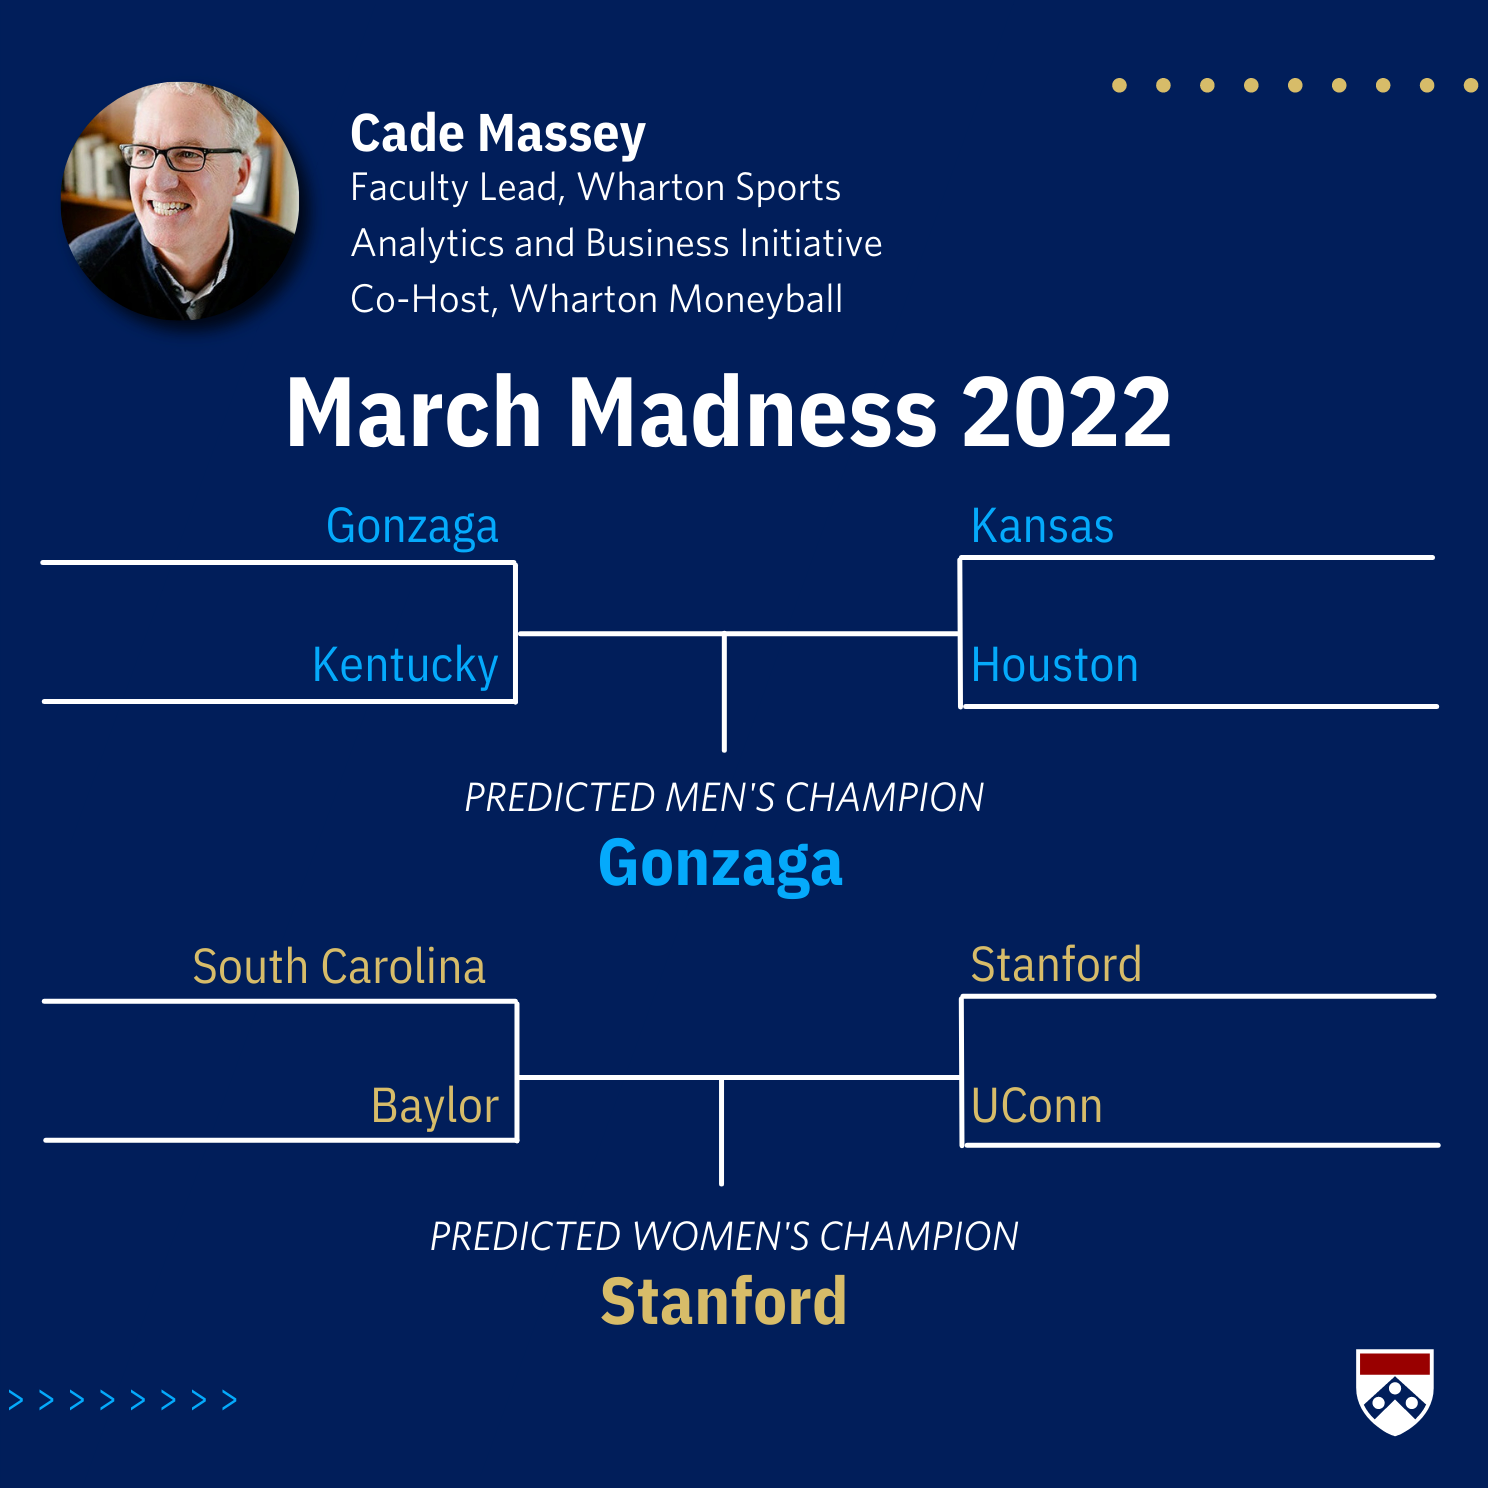 Cade Massey's Final Four Predictions